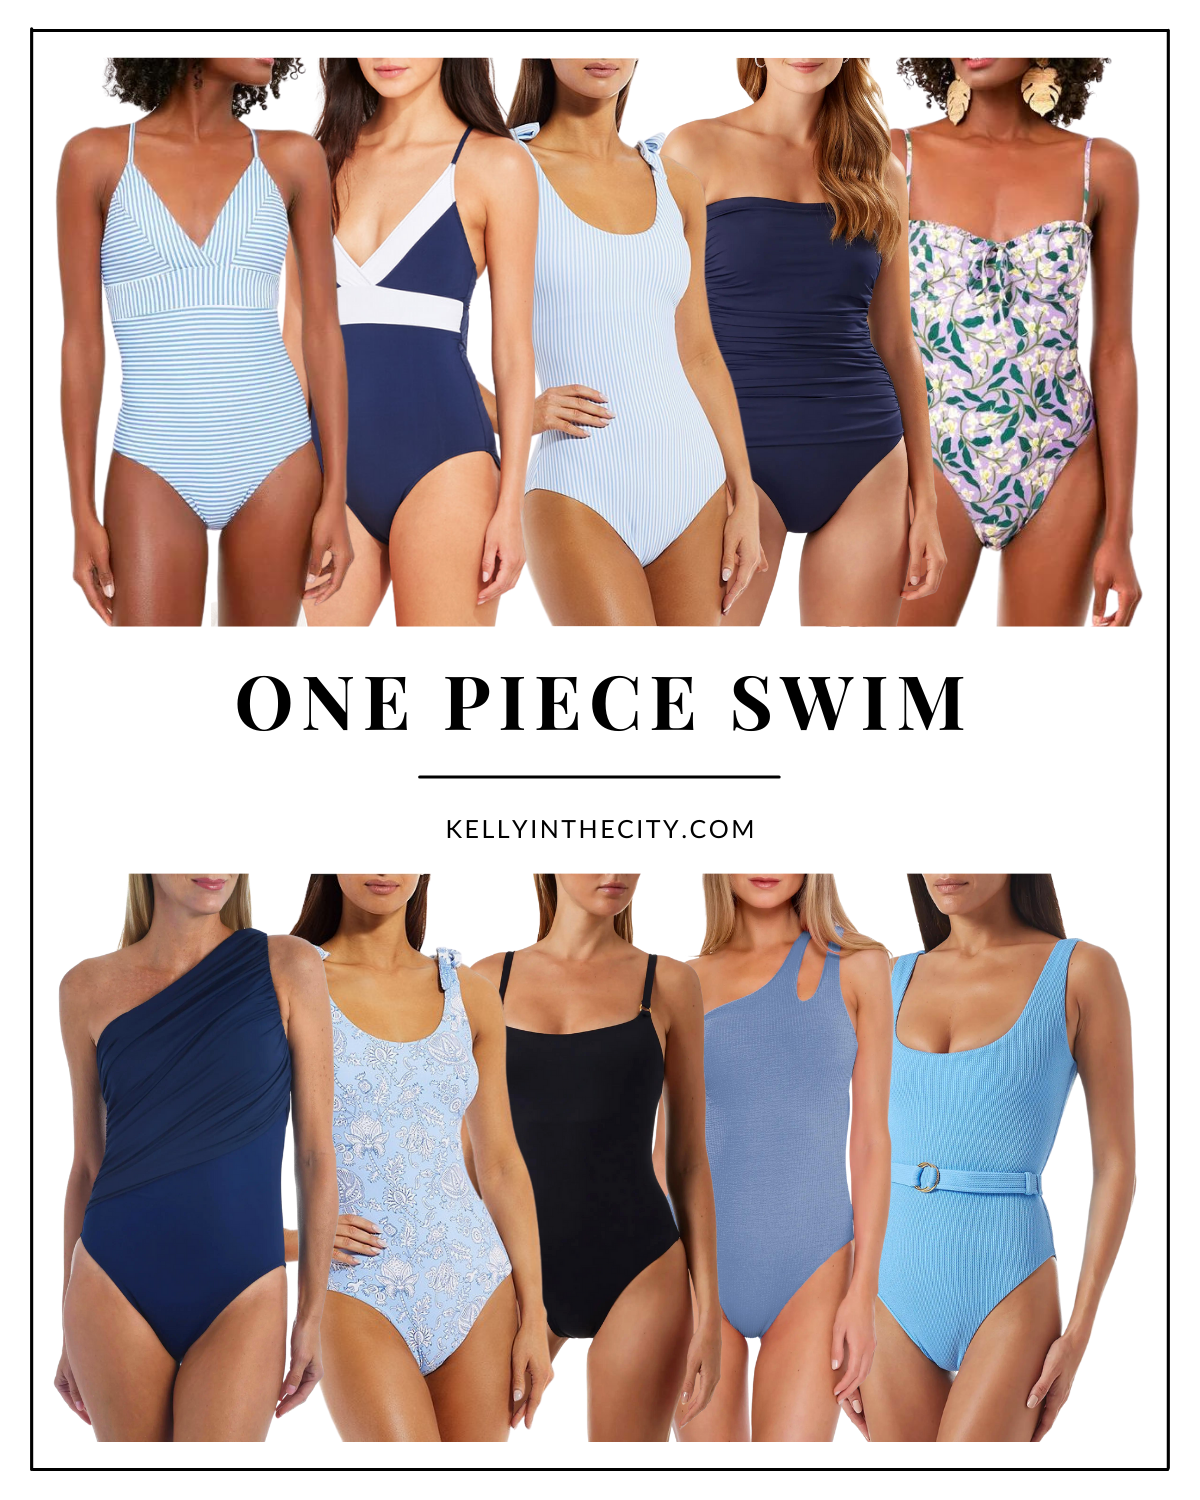 One Piece Swimsuit roundup